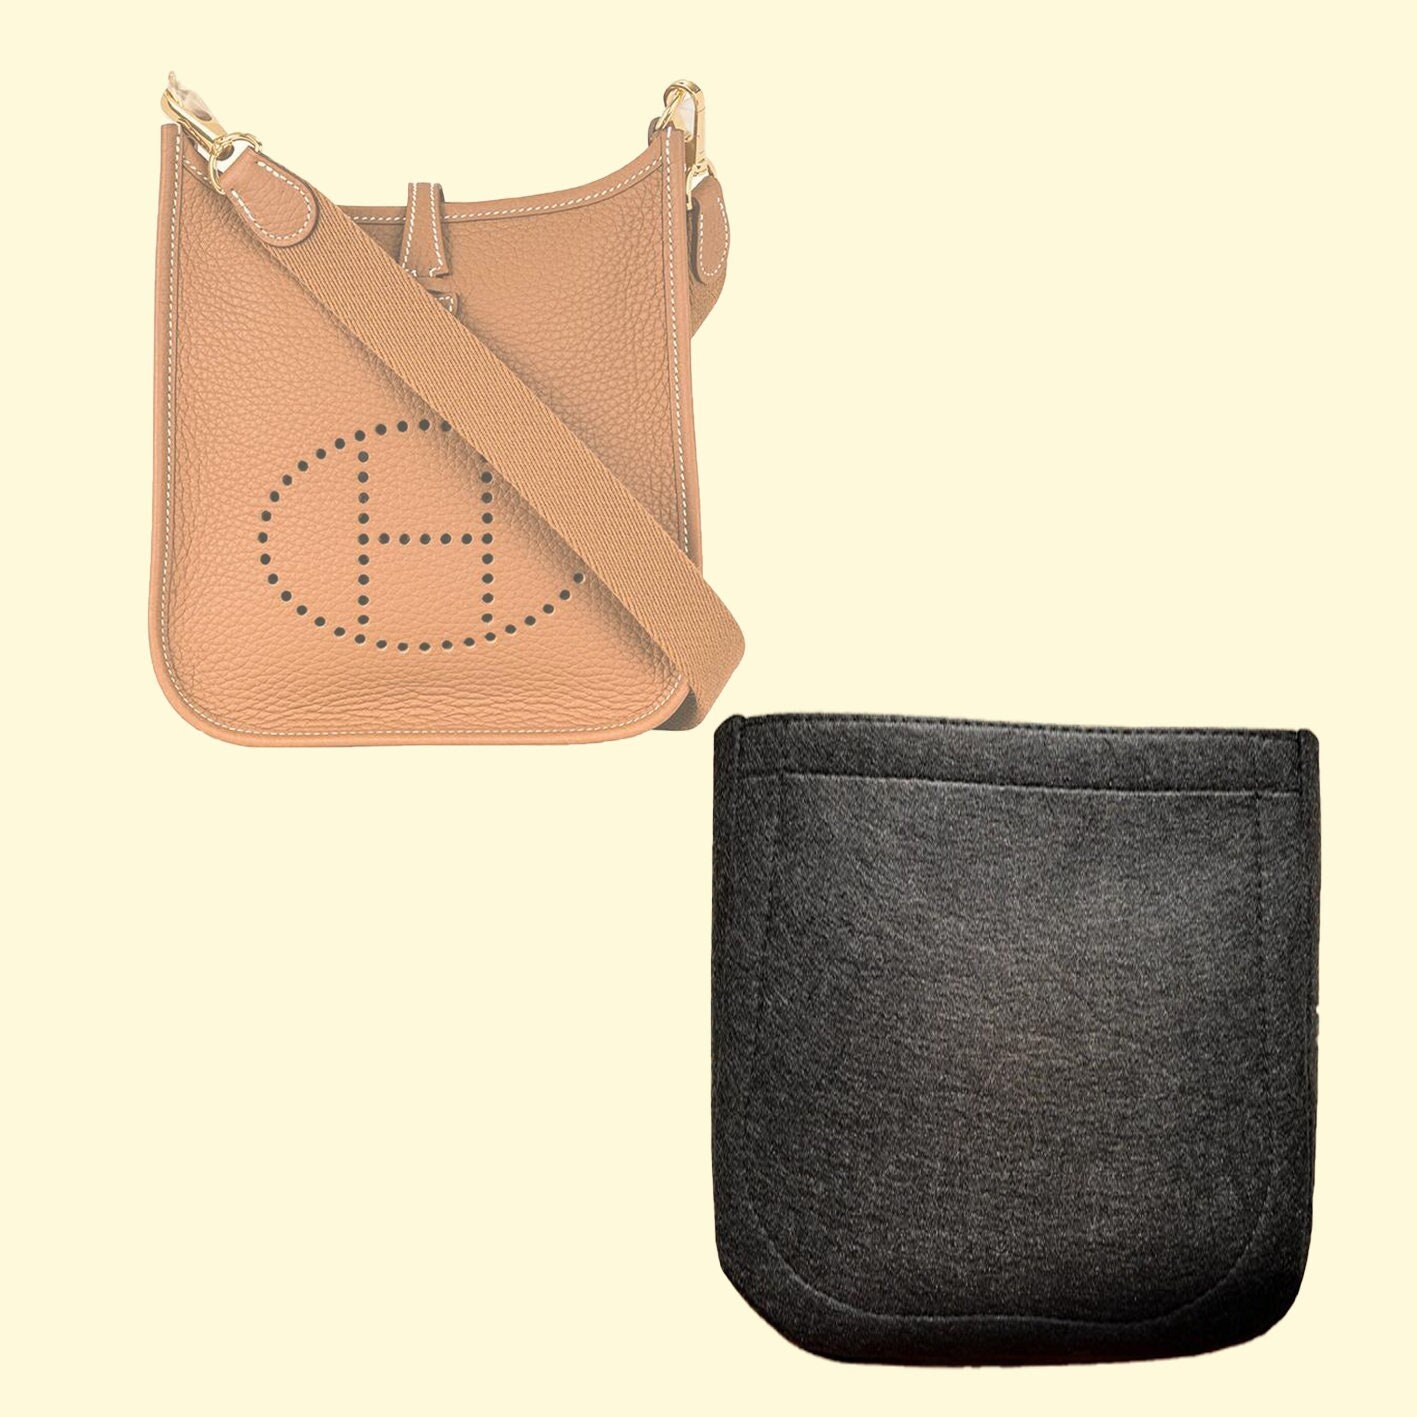 Handbag Purse Organizer Insert | Patented, Sturdy and Flexible Design | Dahlia Lavender